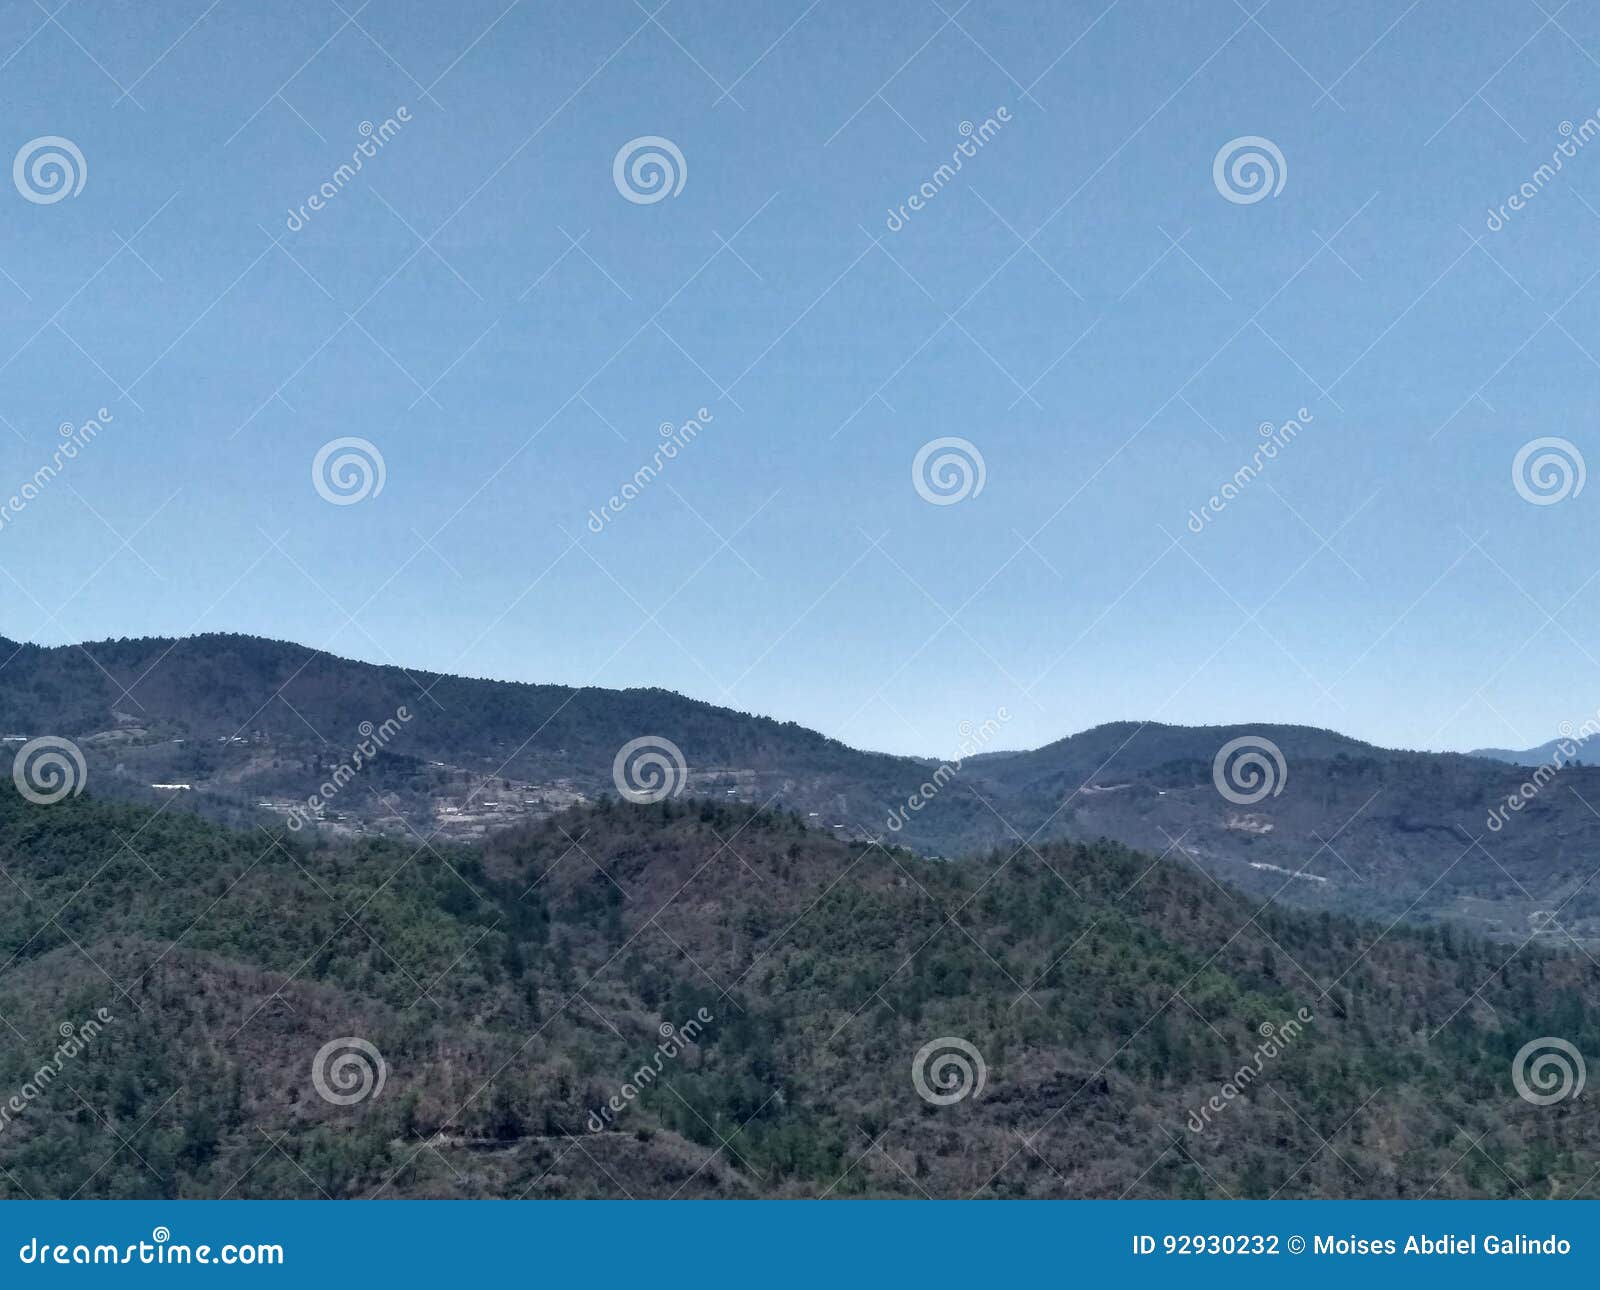 mountains in oaxaca mexico